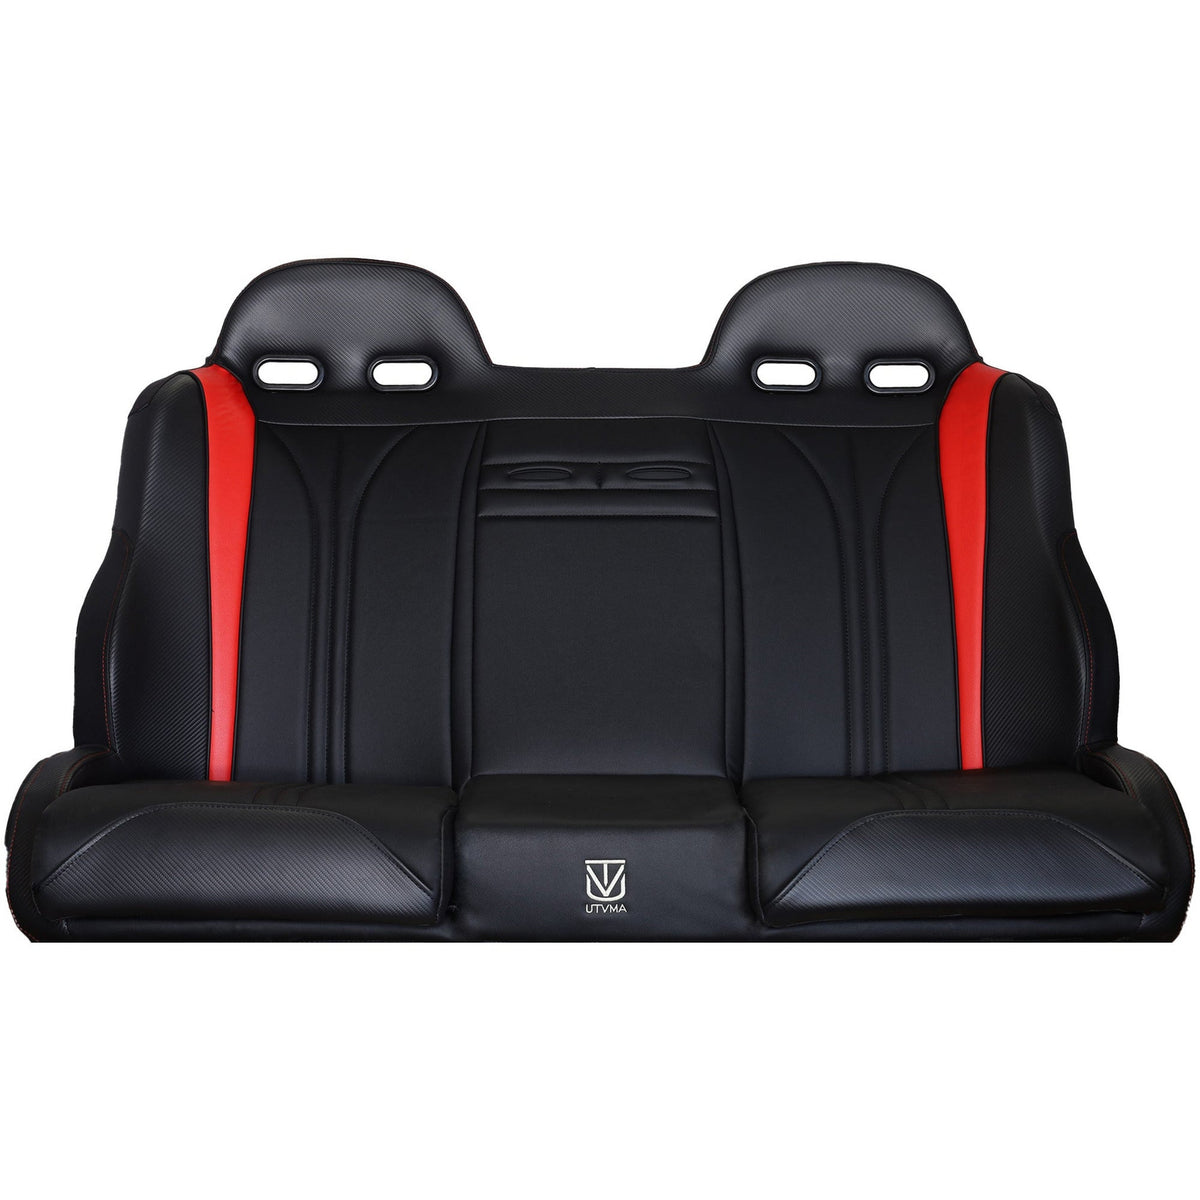 Polaris RZR Pro / Turbo R Rear Bench Seat